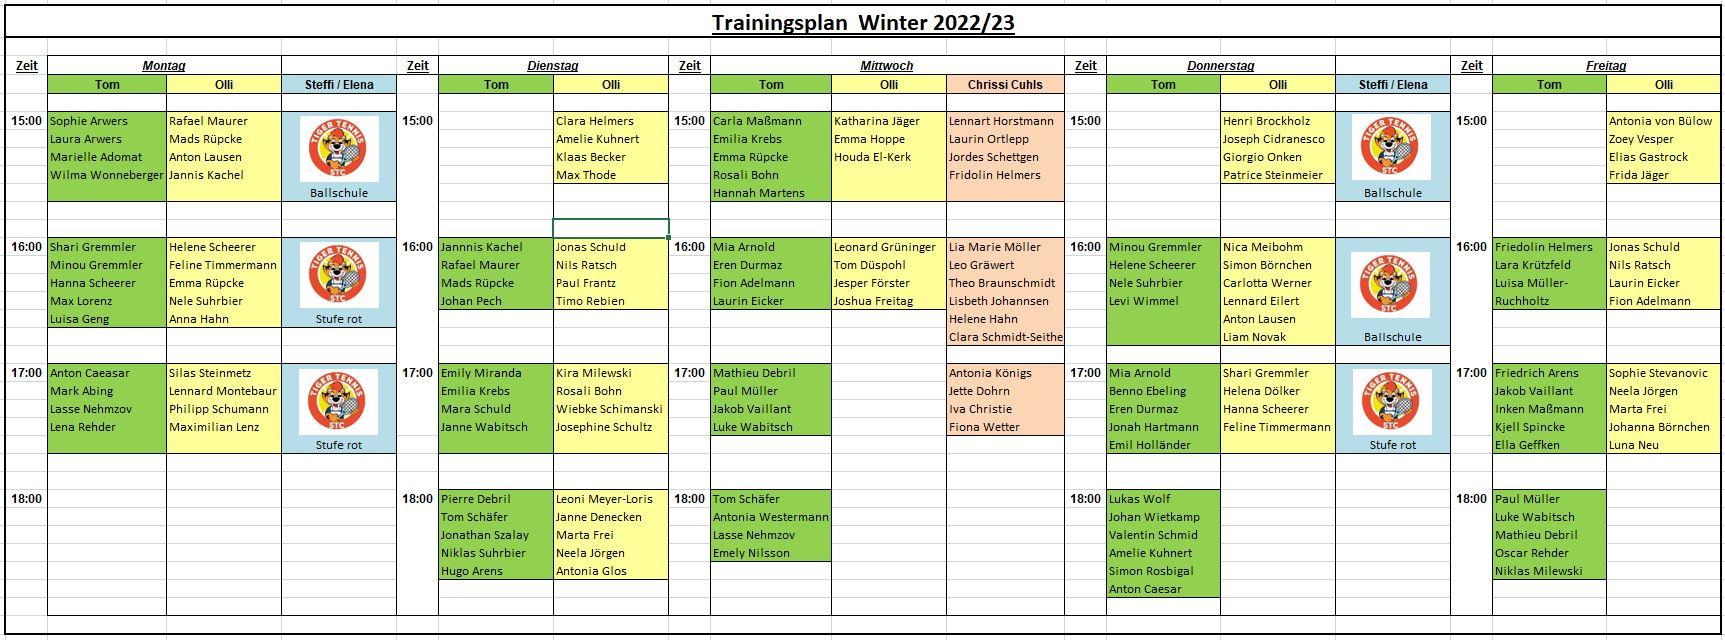 Trainingsplan Winter 2022-23